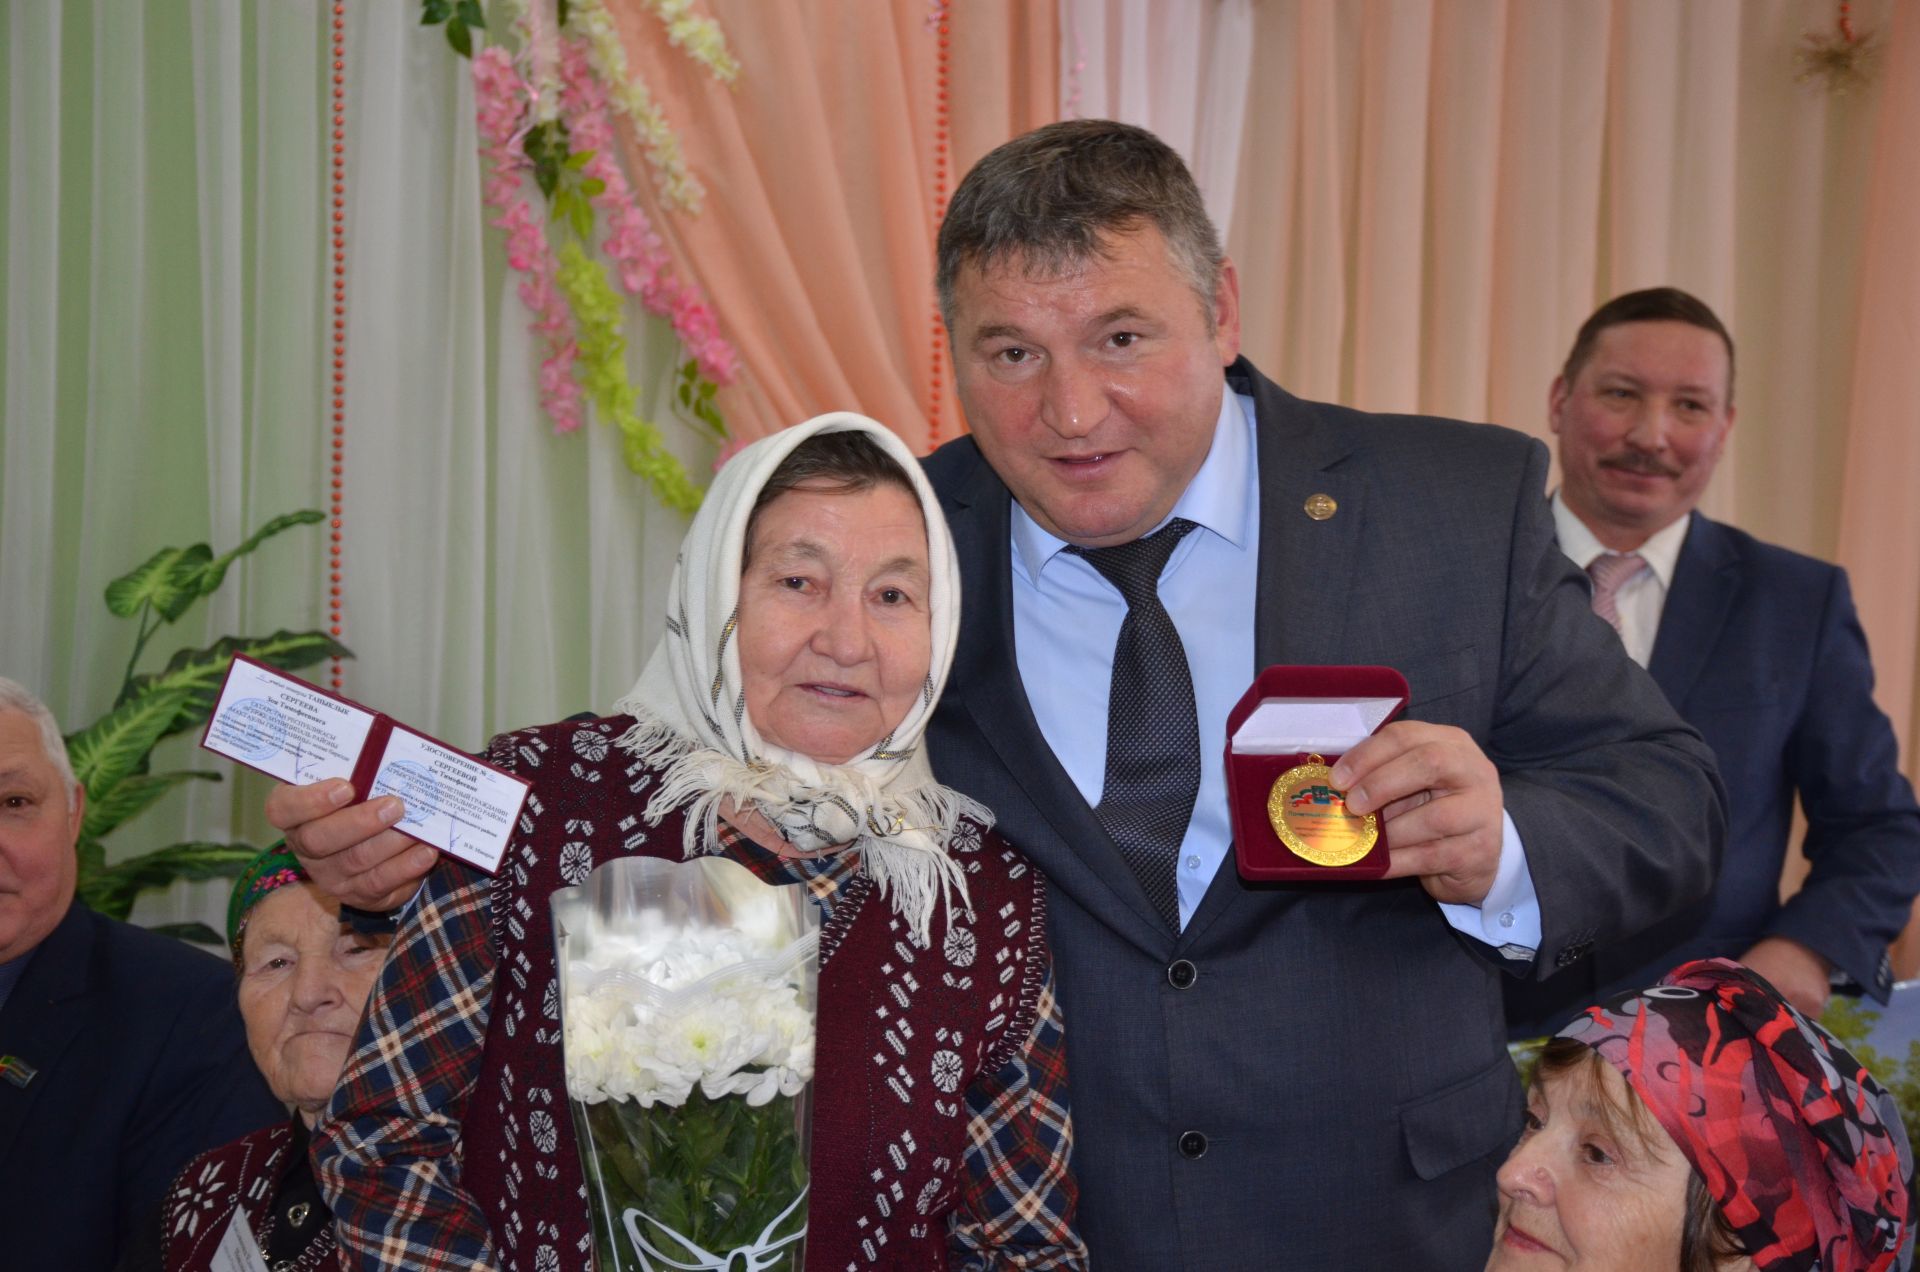 Әгерҗе районының авыл хуҗалыгы ветераннары медаль һәм таныклык алды